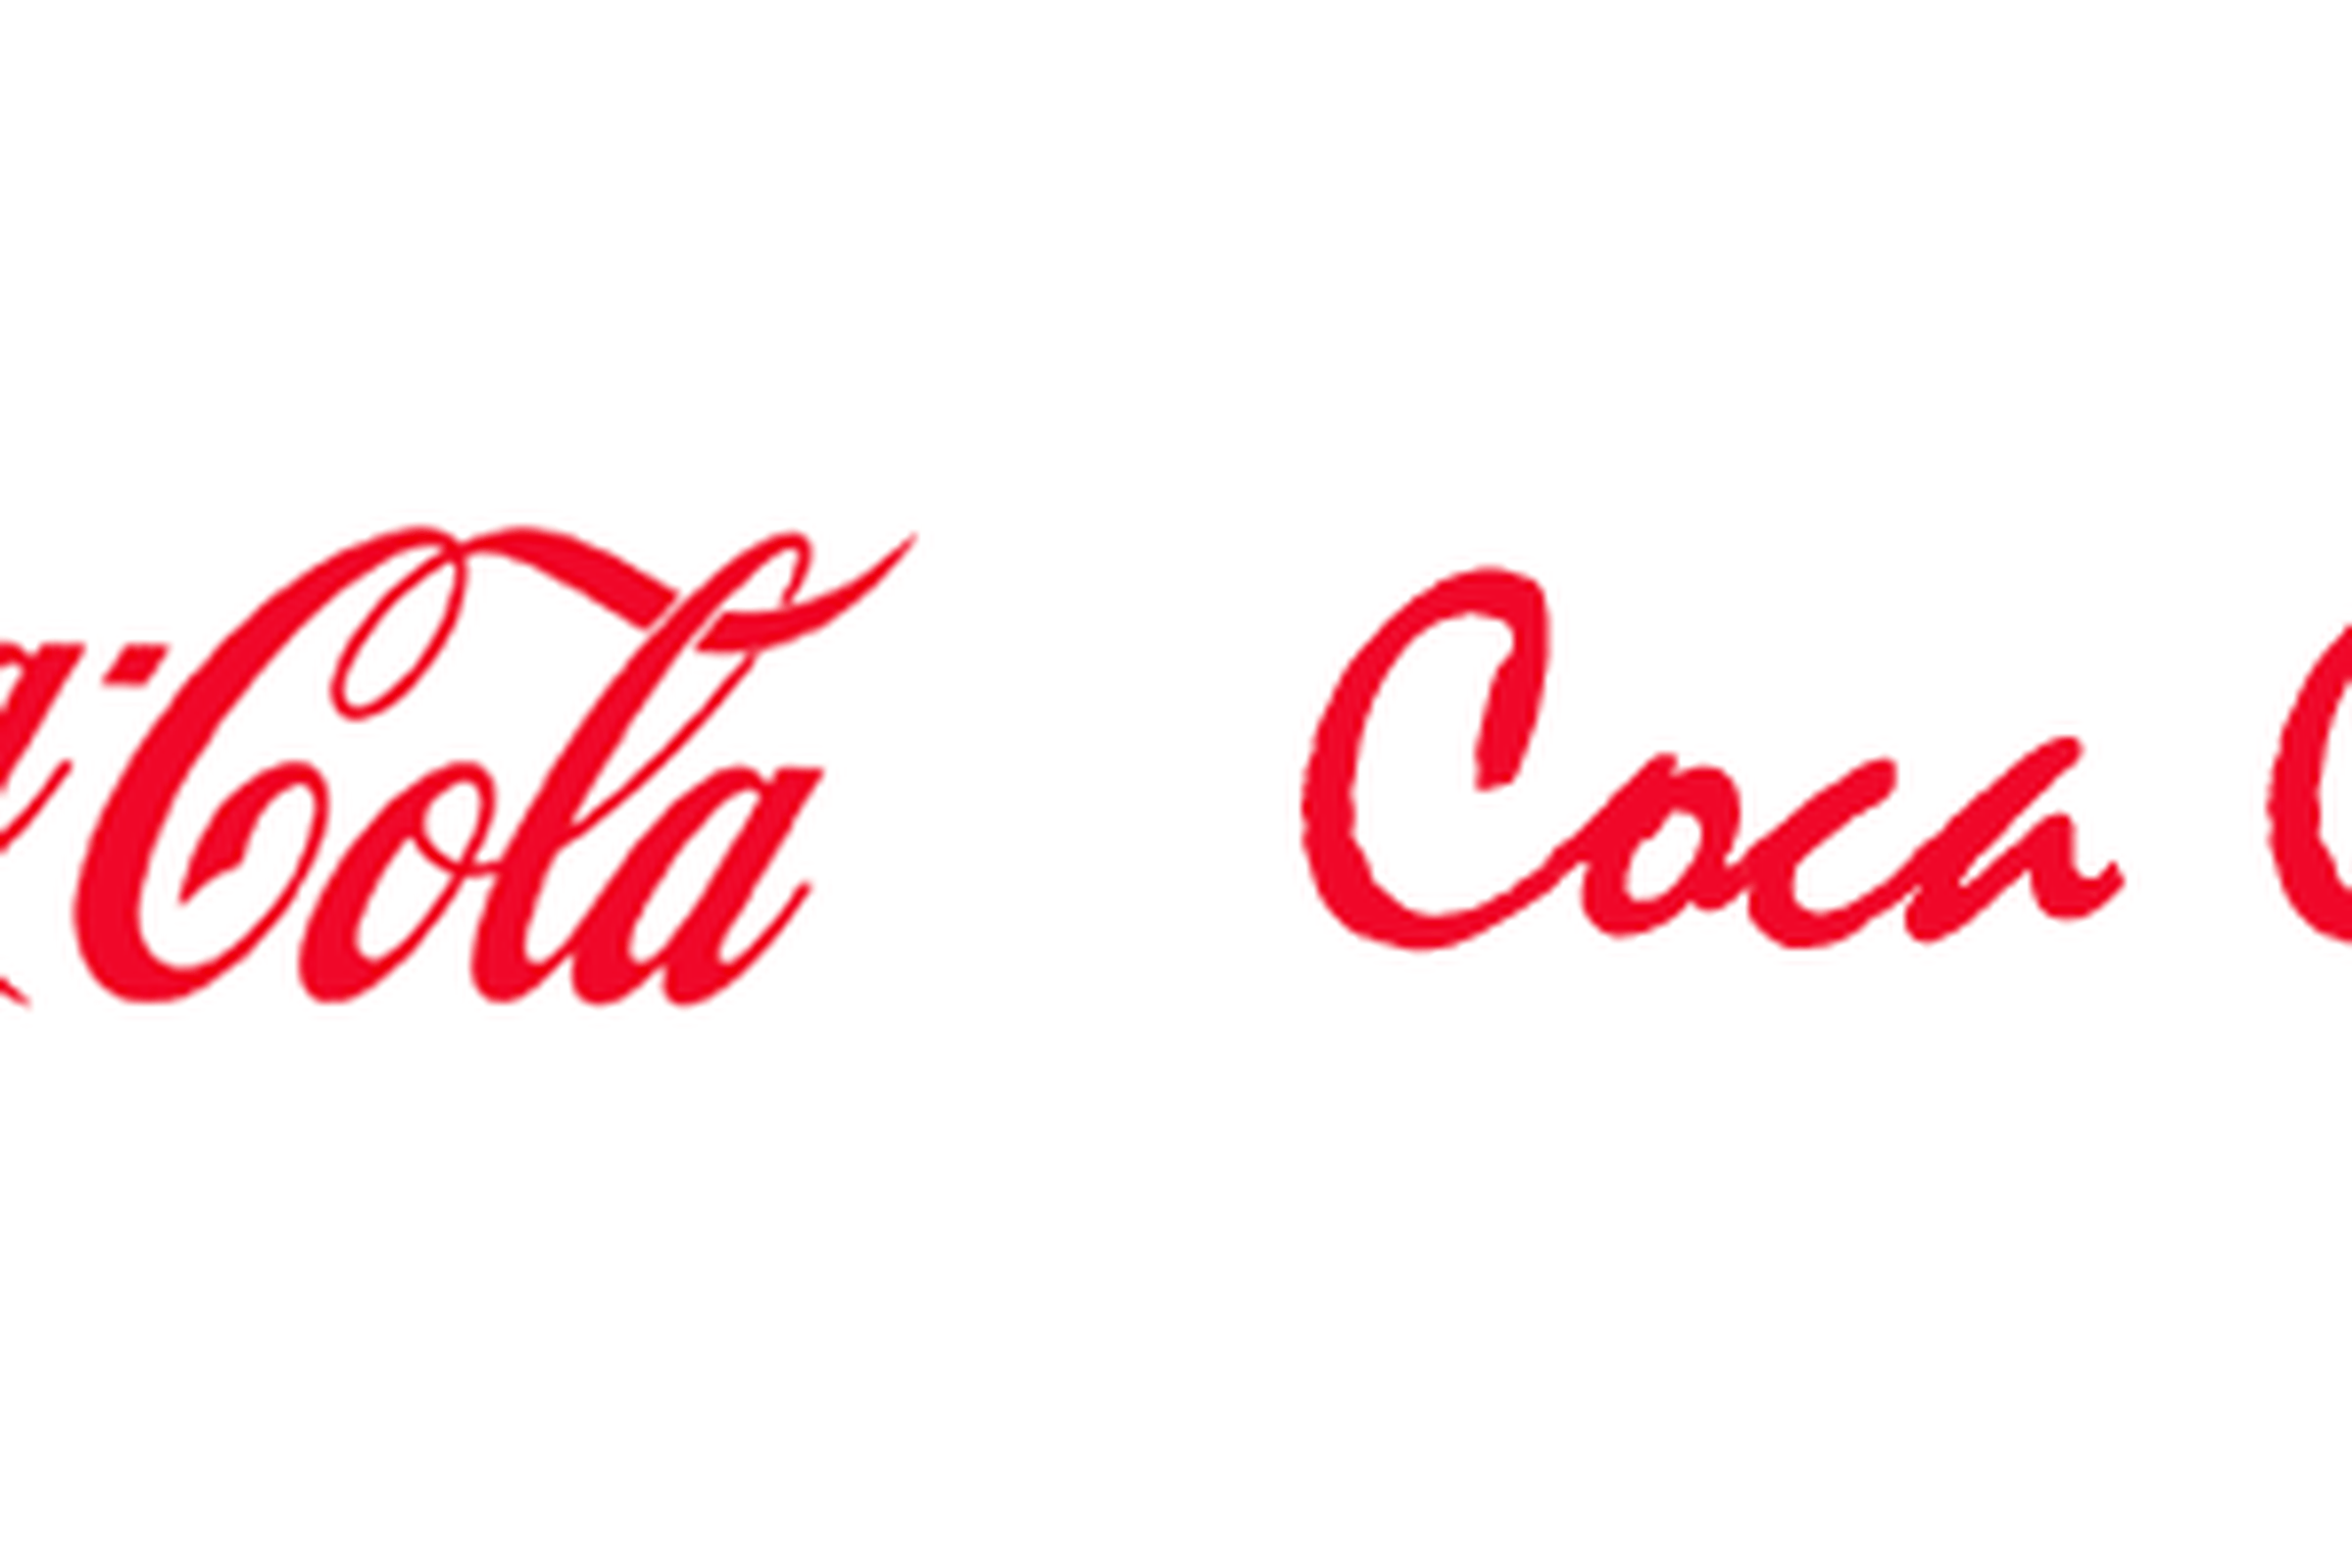 Coca Cola logo reworked